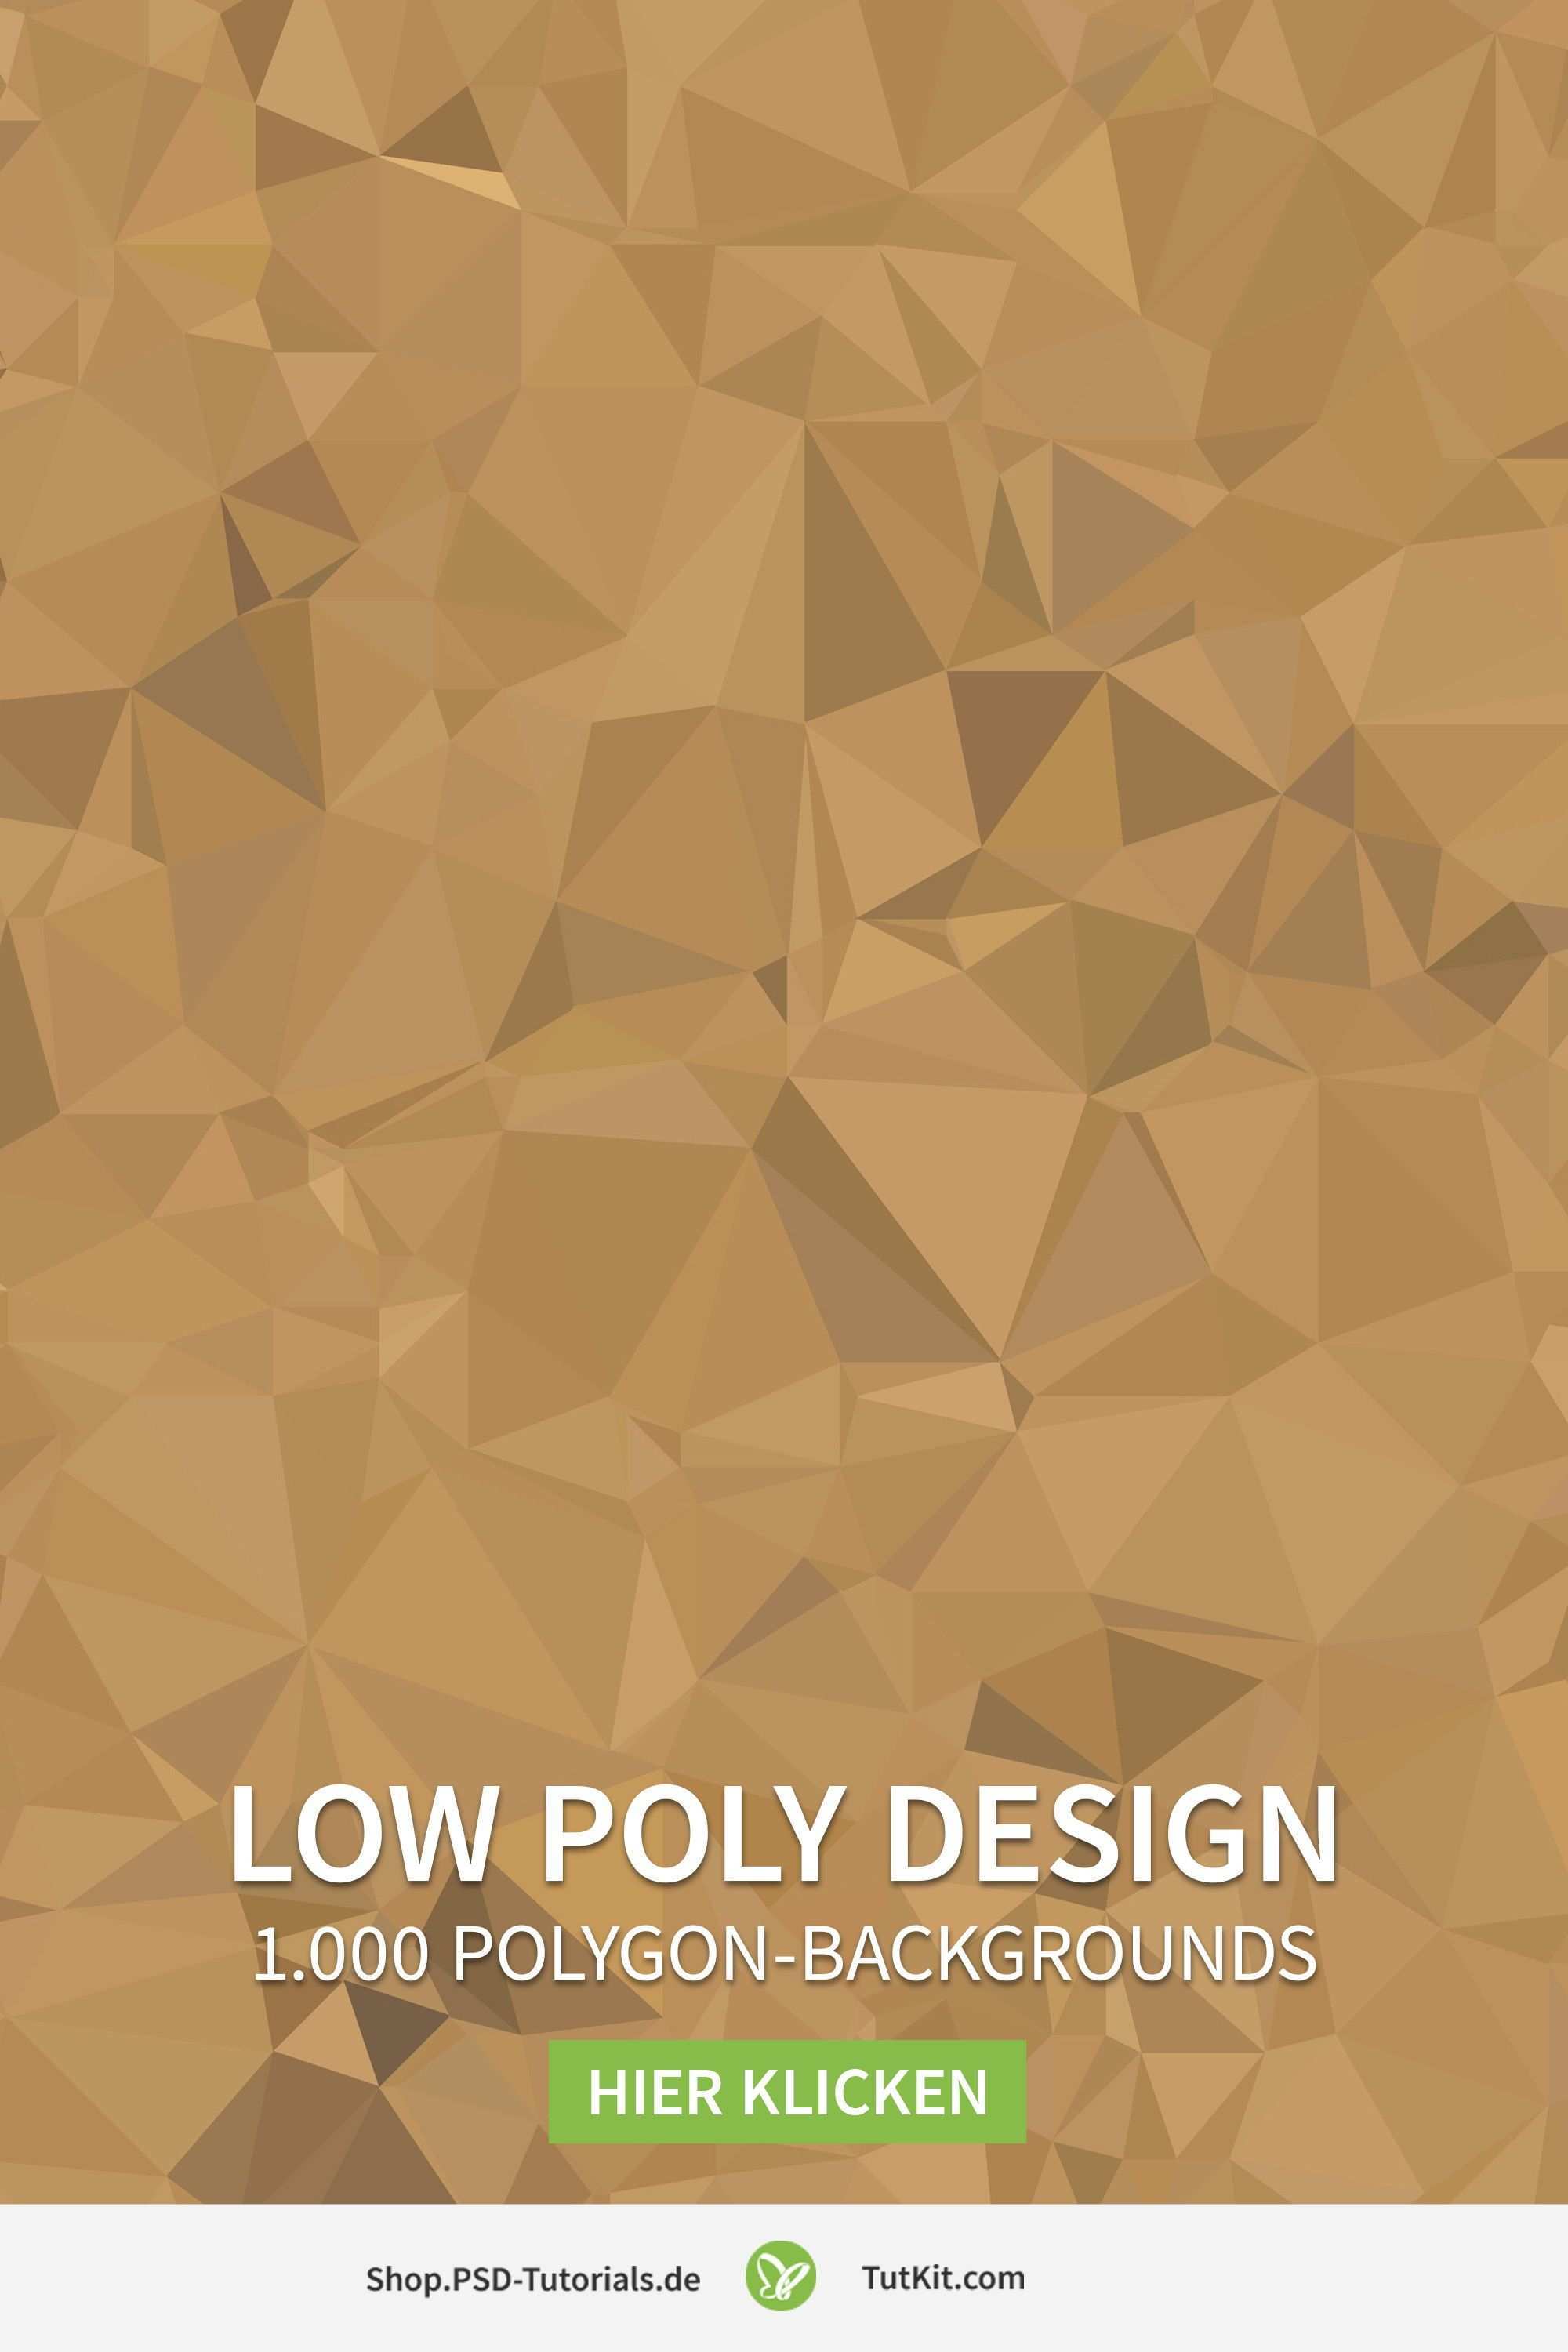 Uber 1 000 Polygon Backgrounds Wallpaper Im Low Poly Design Low Poly Bilder Effekte Affinity Photo